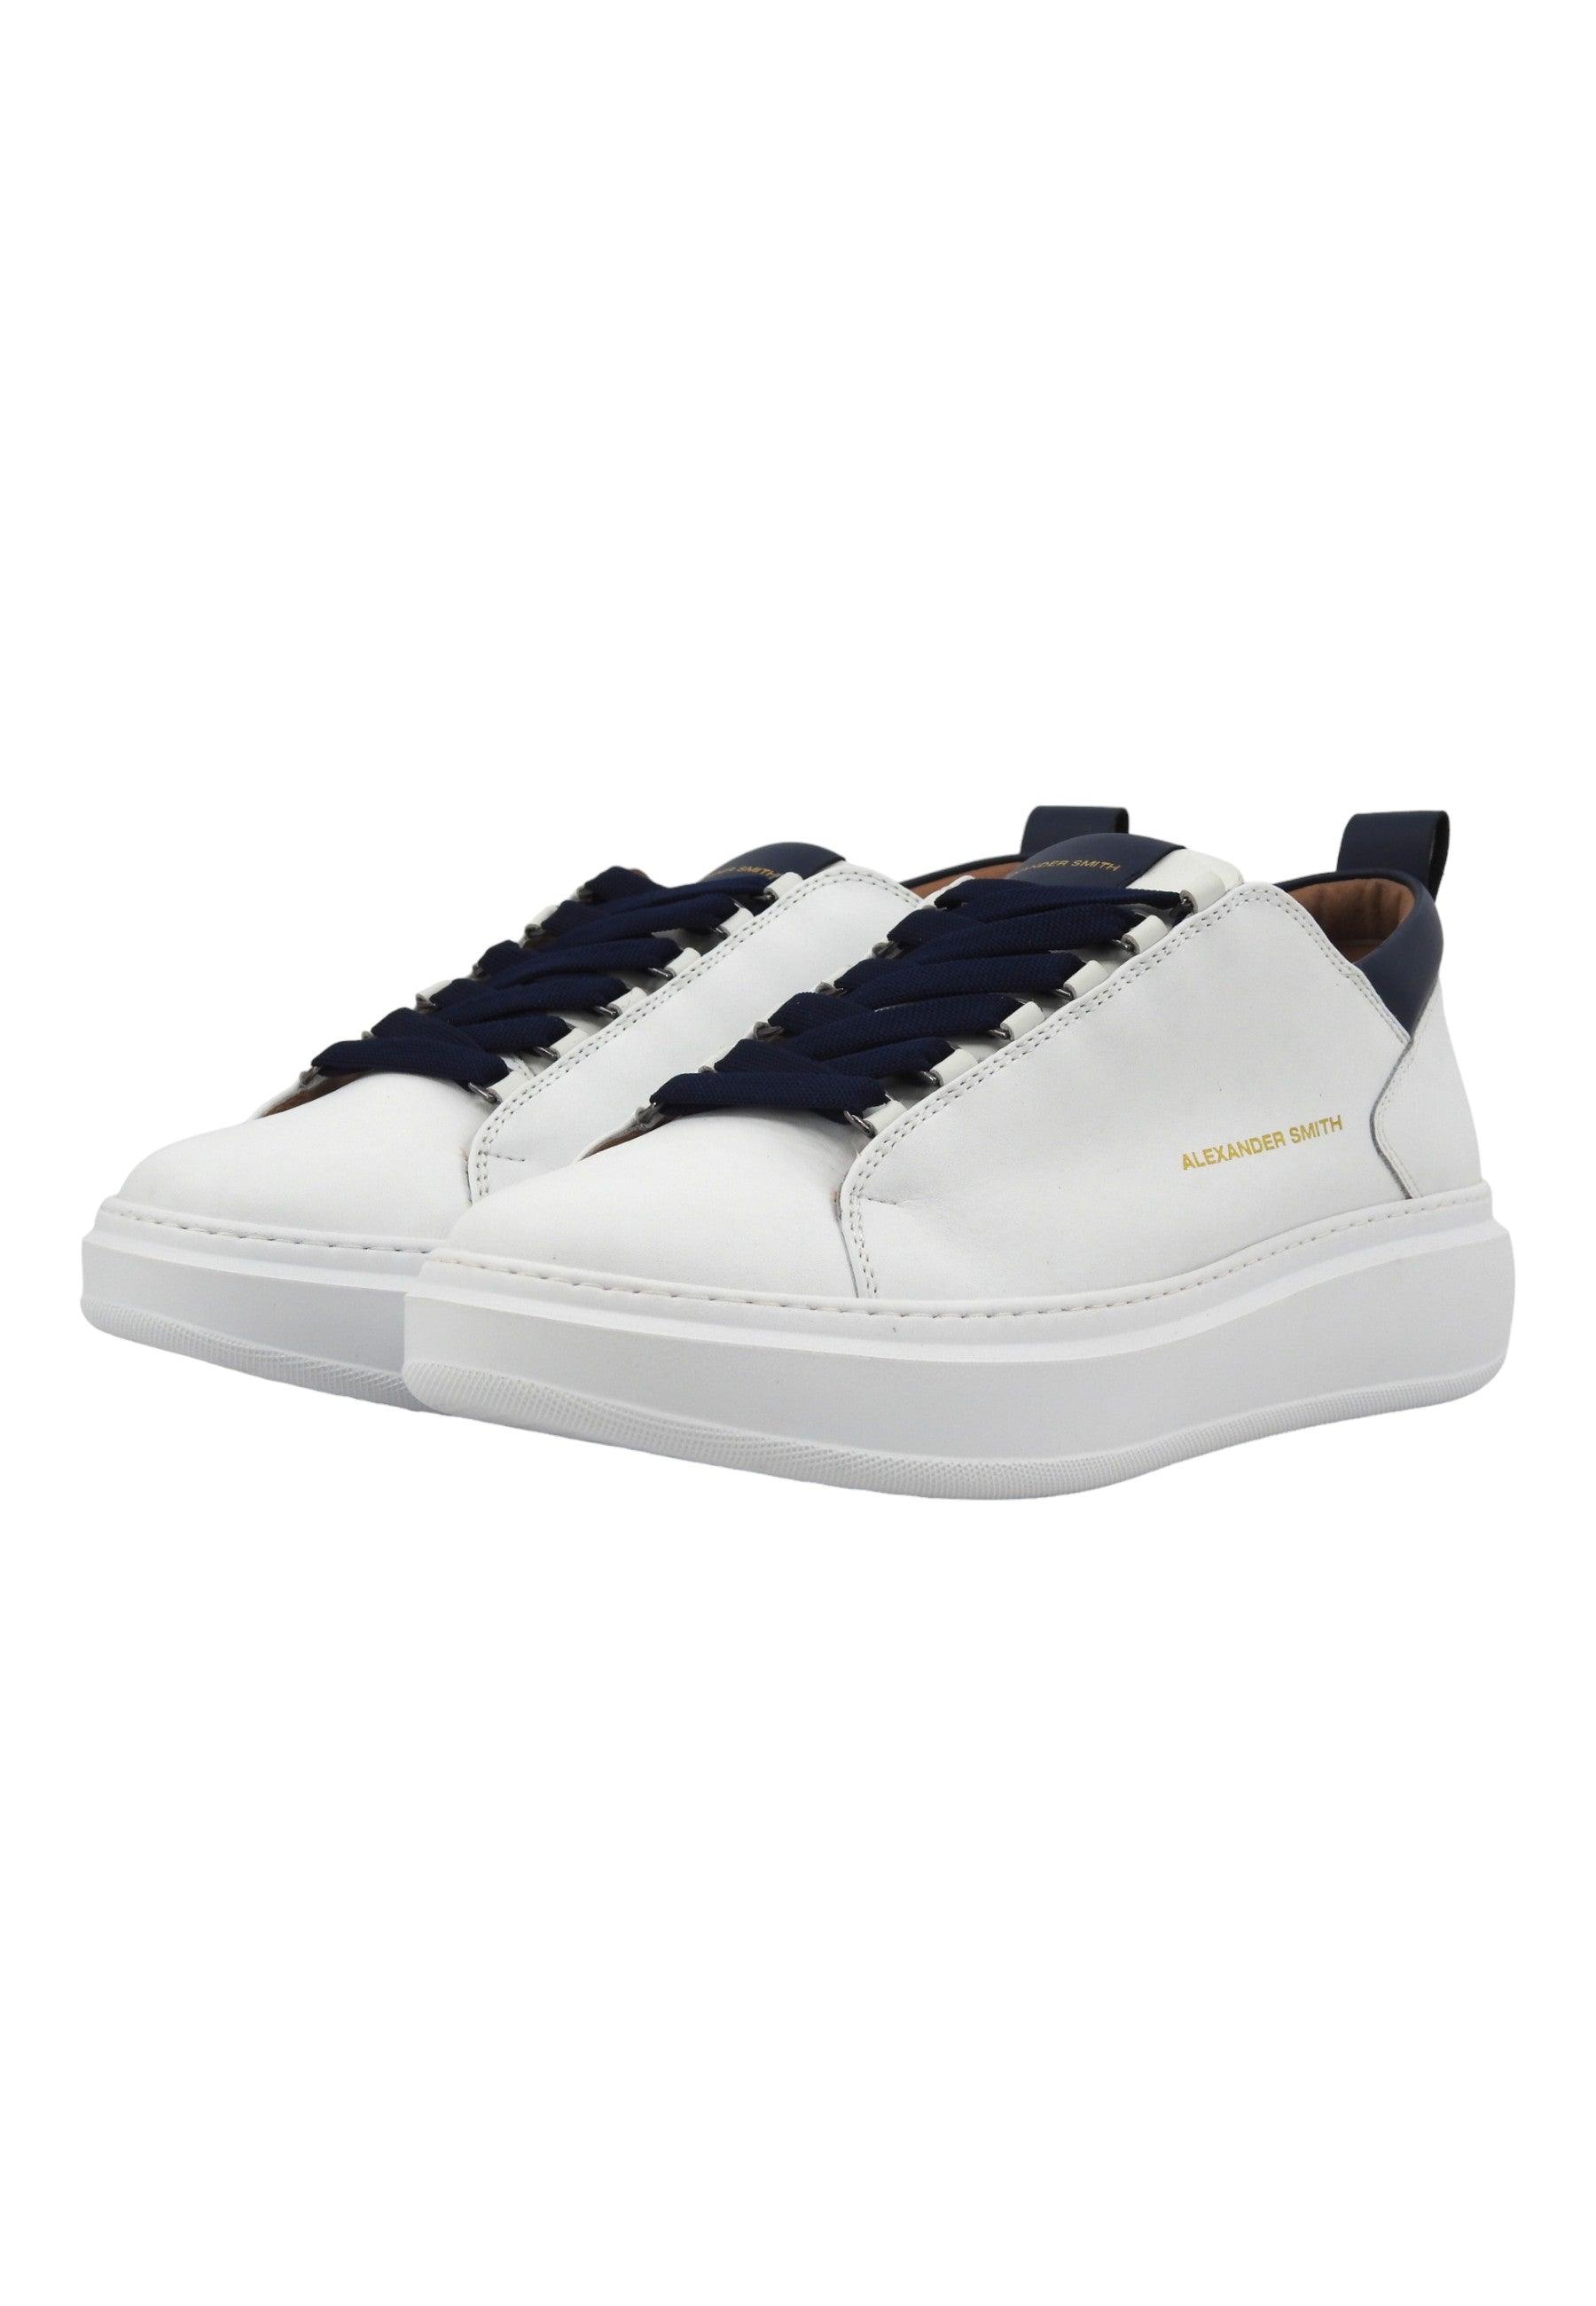 ALEXANDER SMITH Wembley Sneaker Uomo White Blue WYM2260 - Sandrini Calzature e Abbigliamento